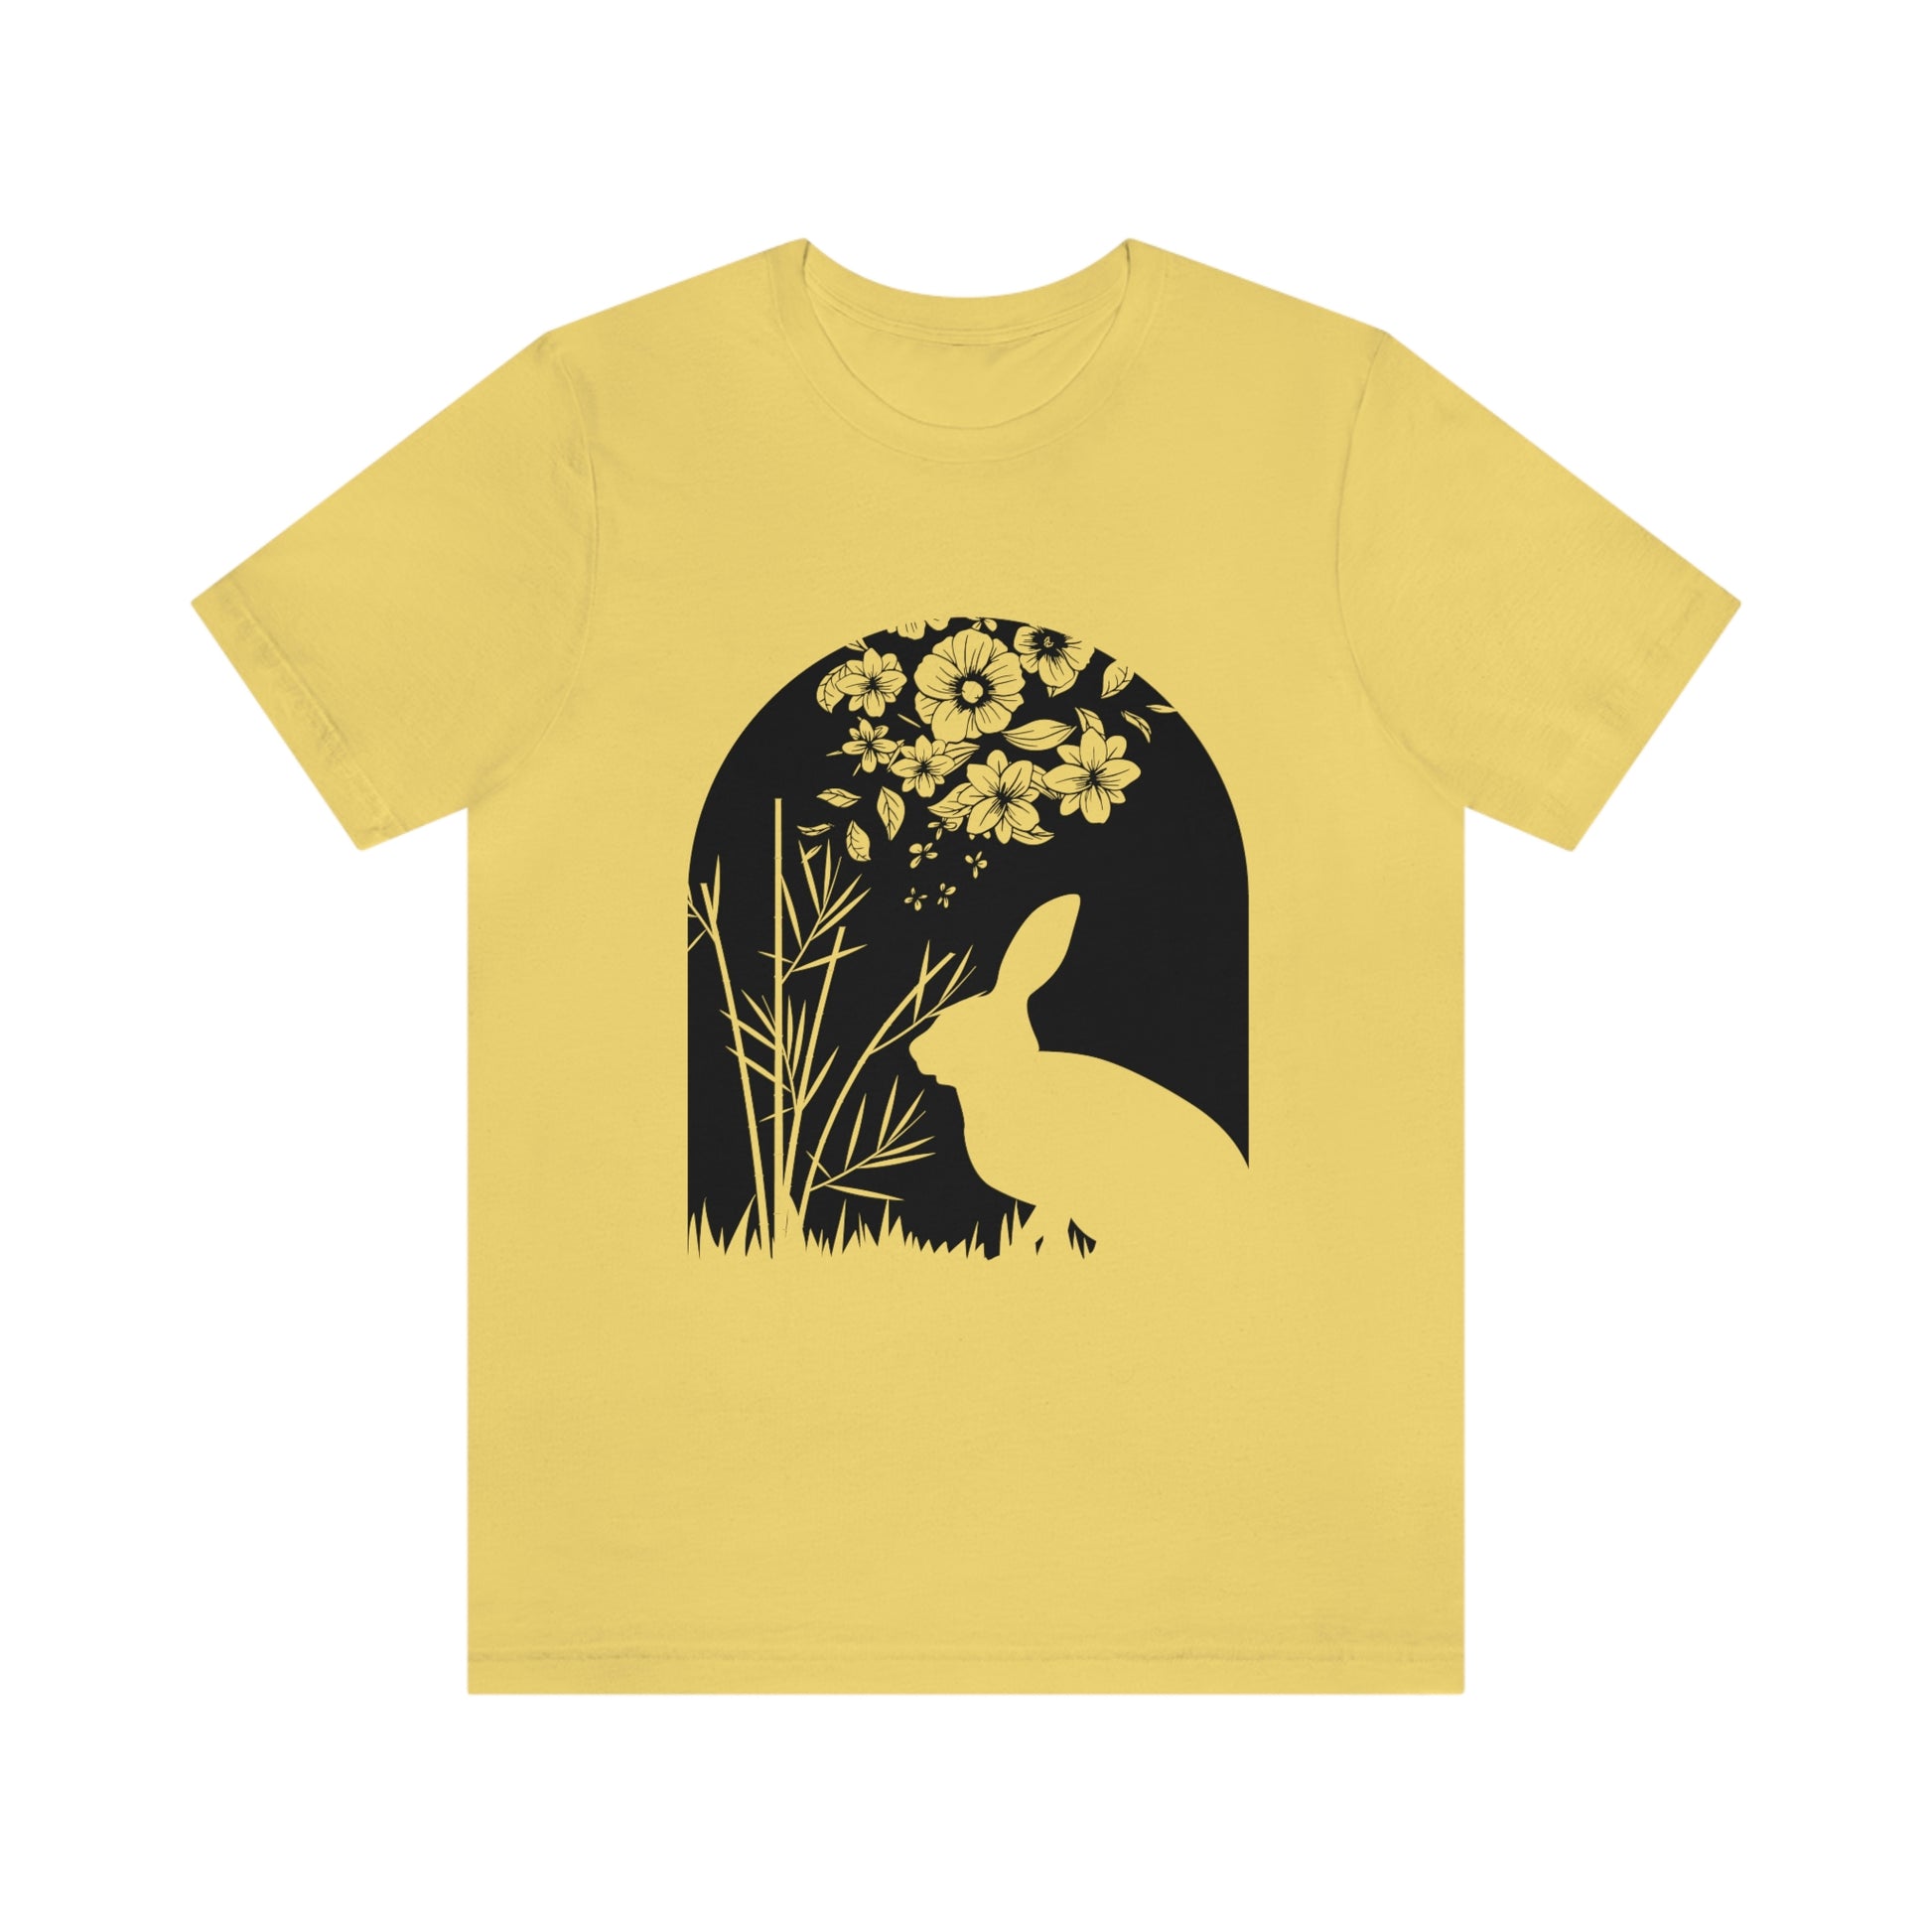 Bunny silhouette scene tshirt tee t-shirt